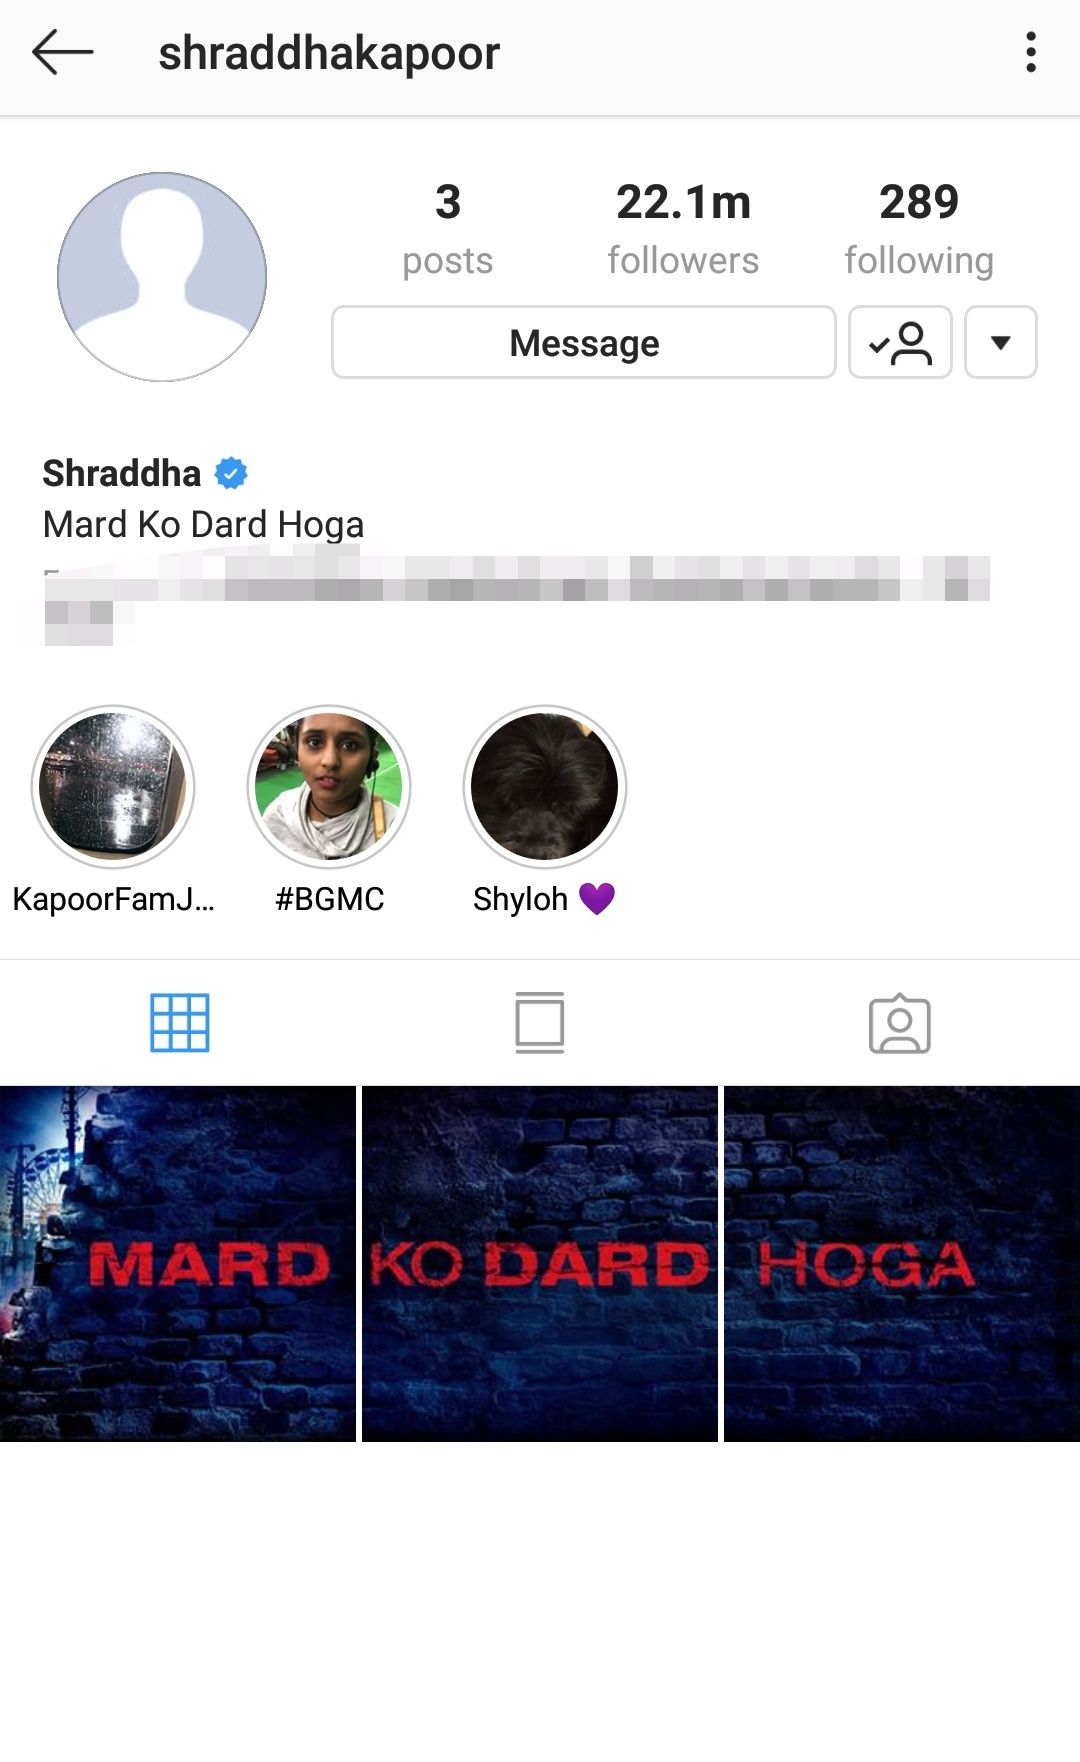 Shraddha Kapoor's Instagram feed